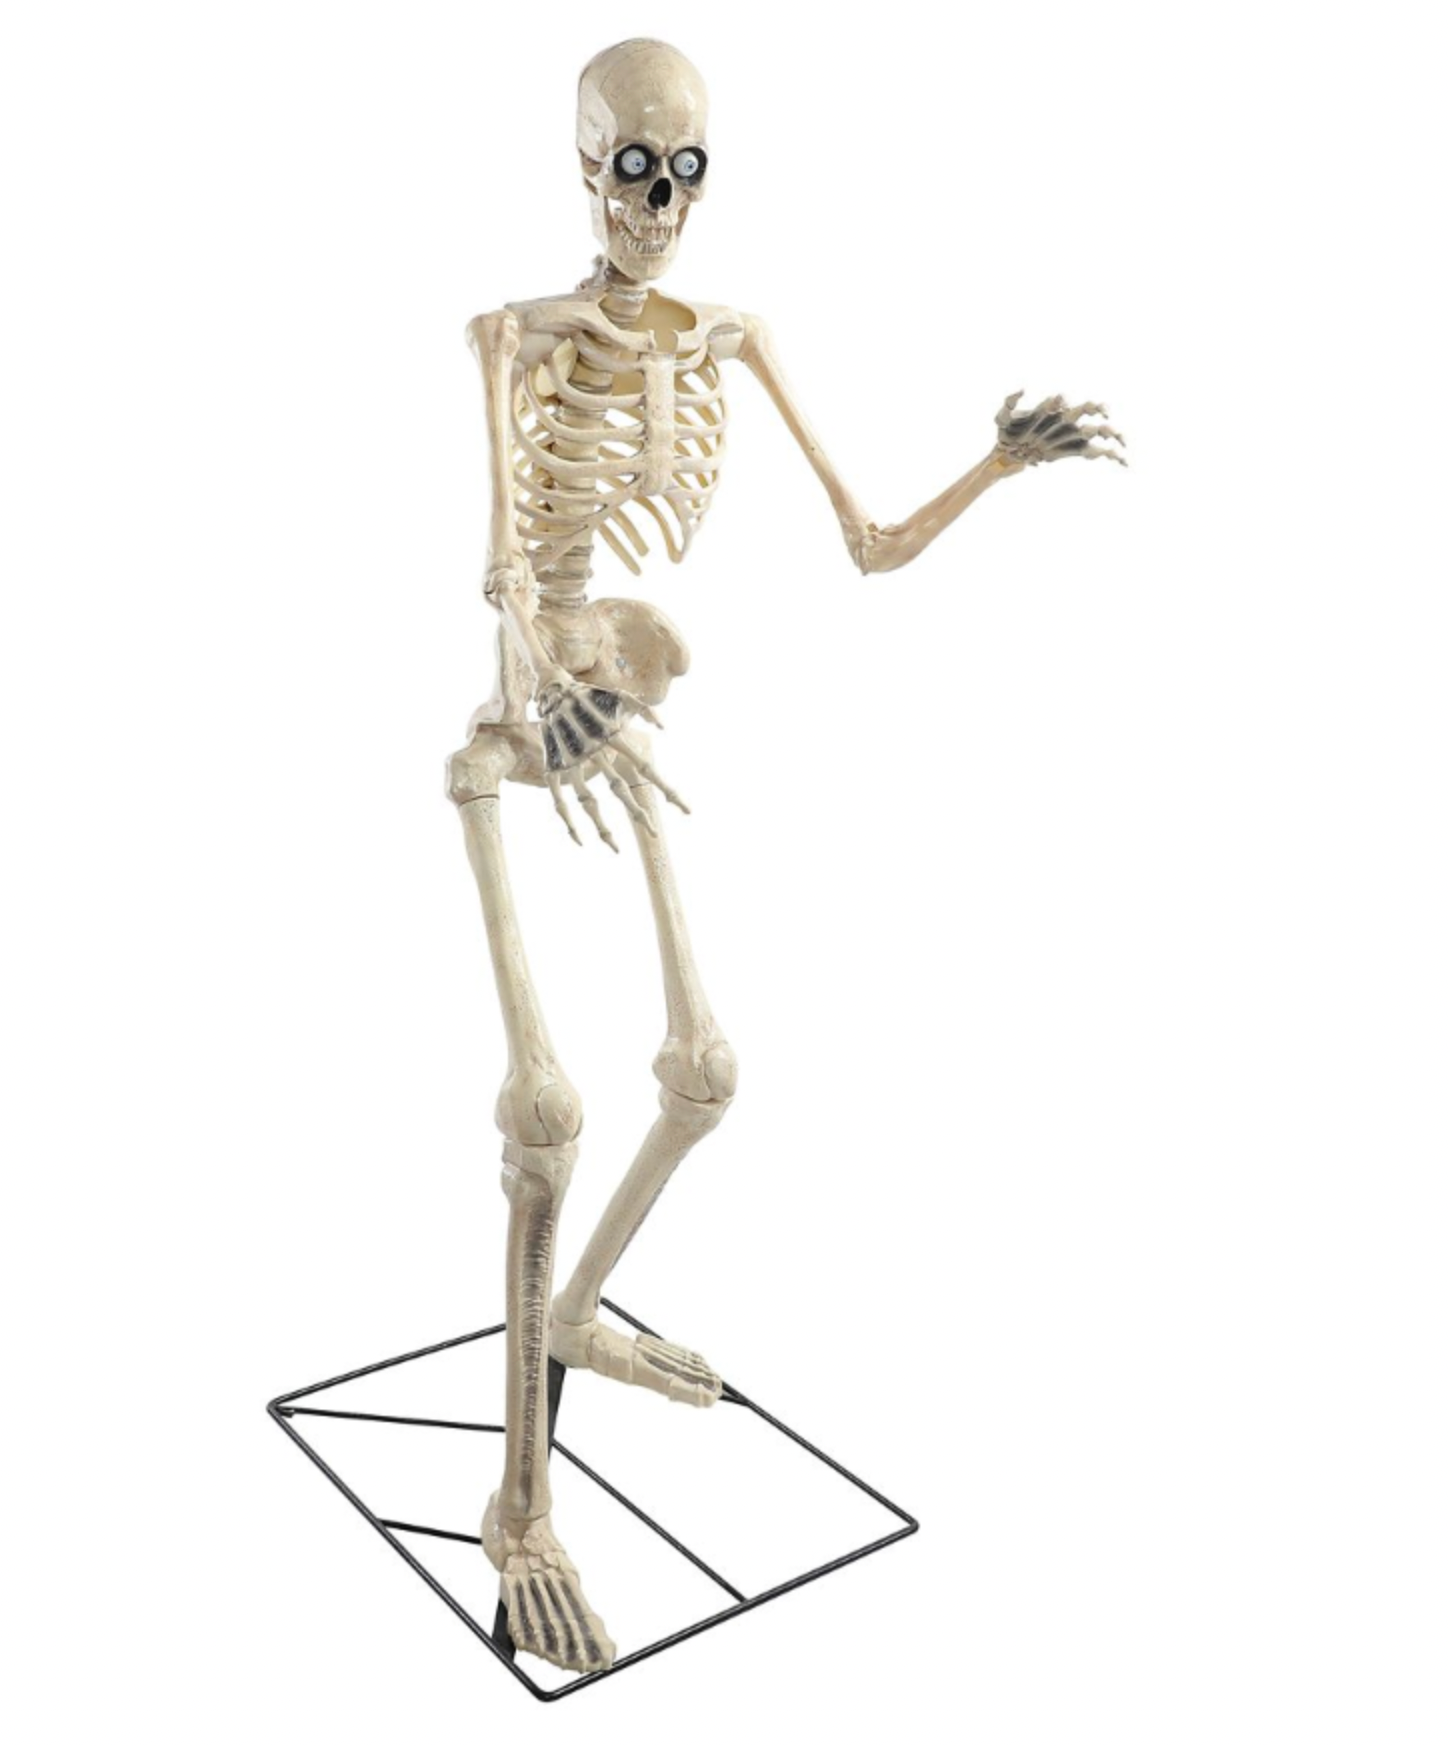 5 Ways Home Depot's Skeleton May Bone Up Long-Term Sales